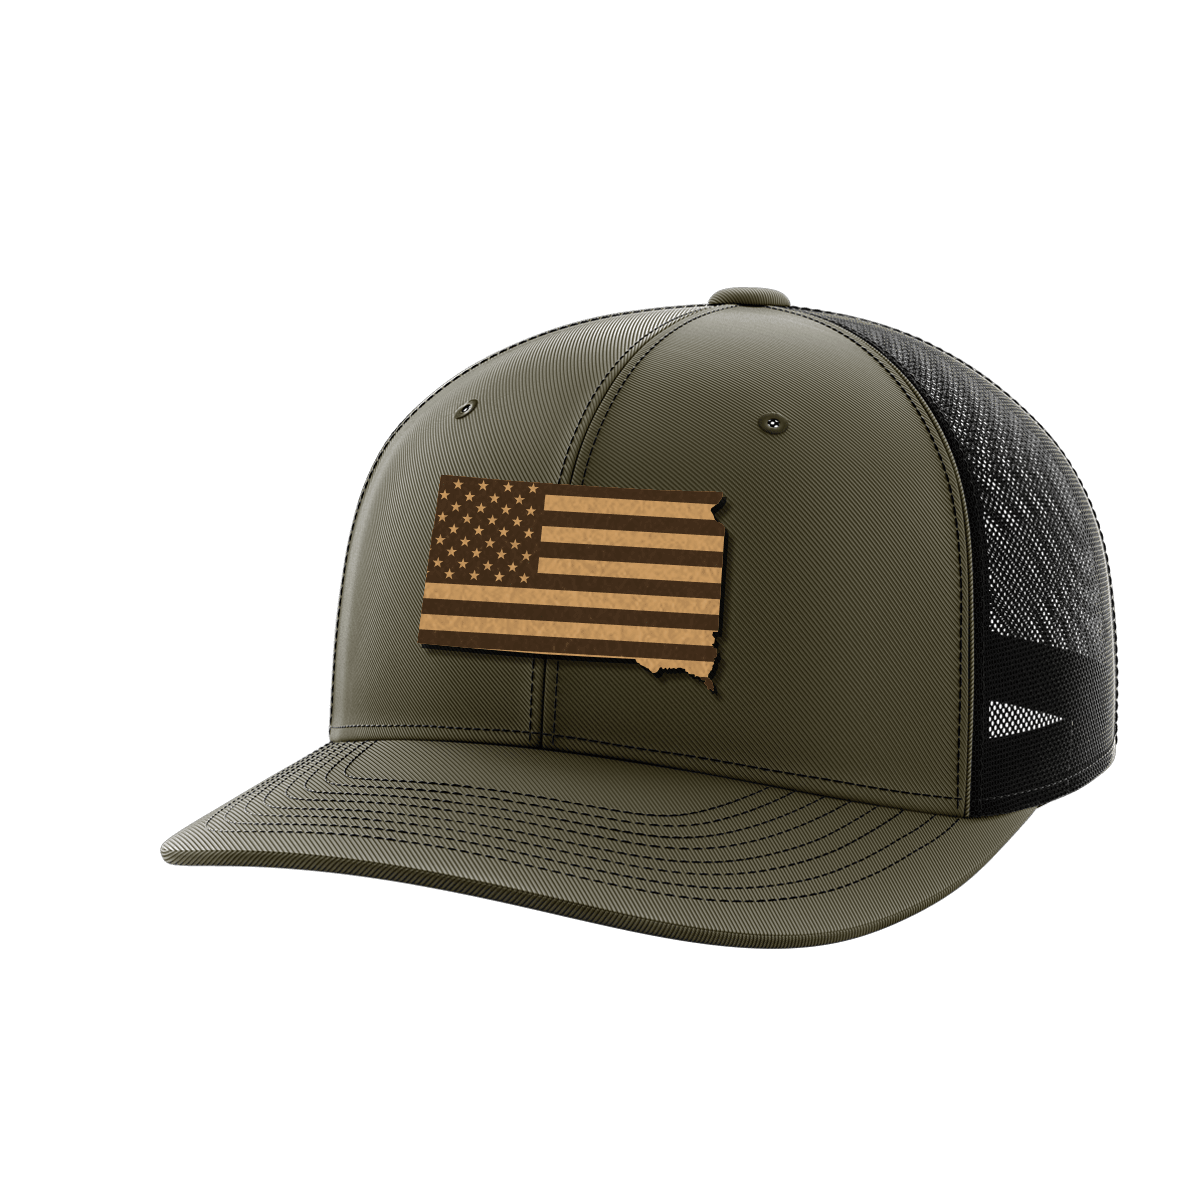 Thumbnail for South Dakota United Hats - Greater Half